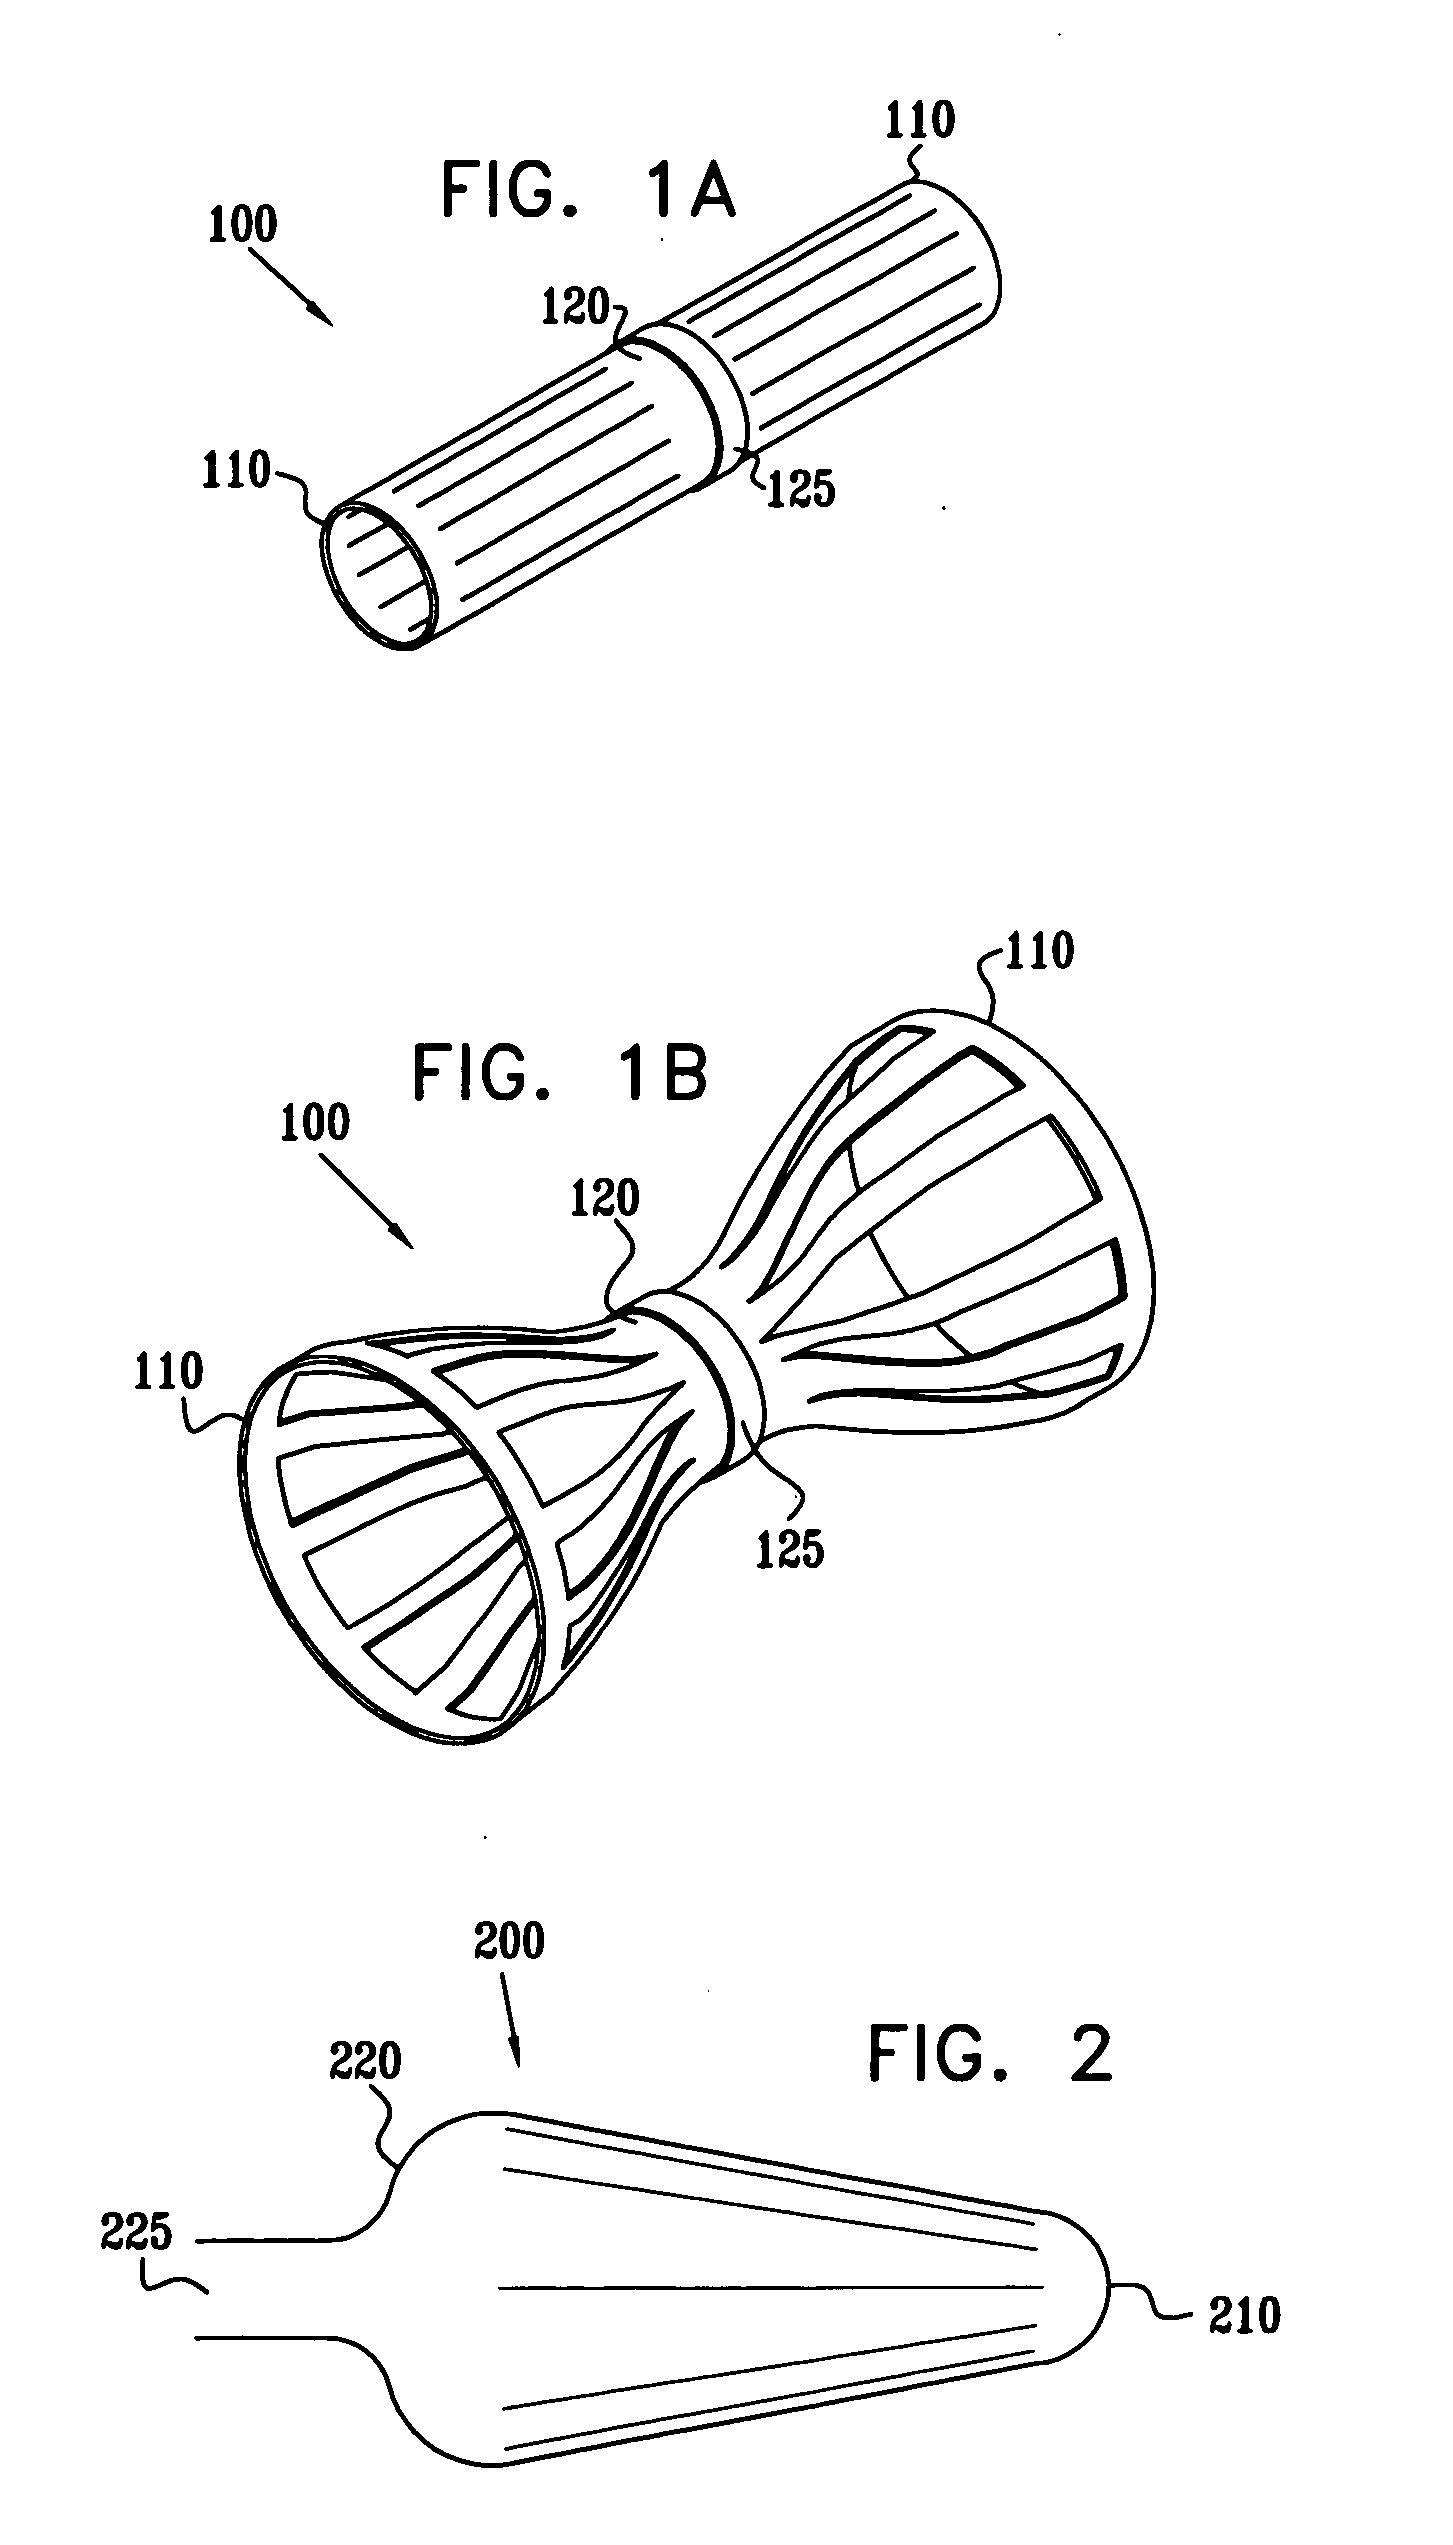 Varying-diameter vascular implant and balloon